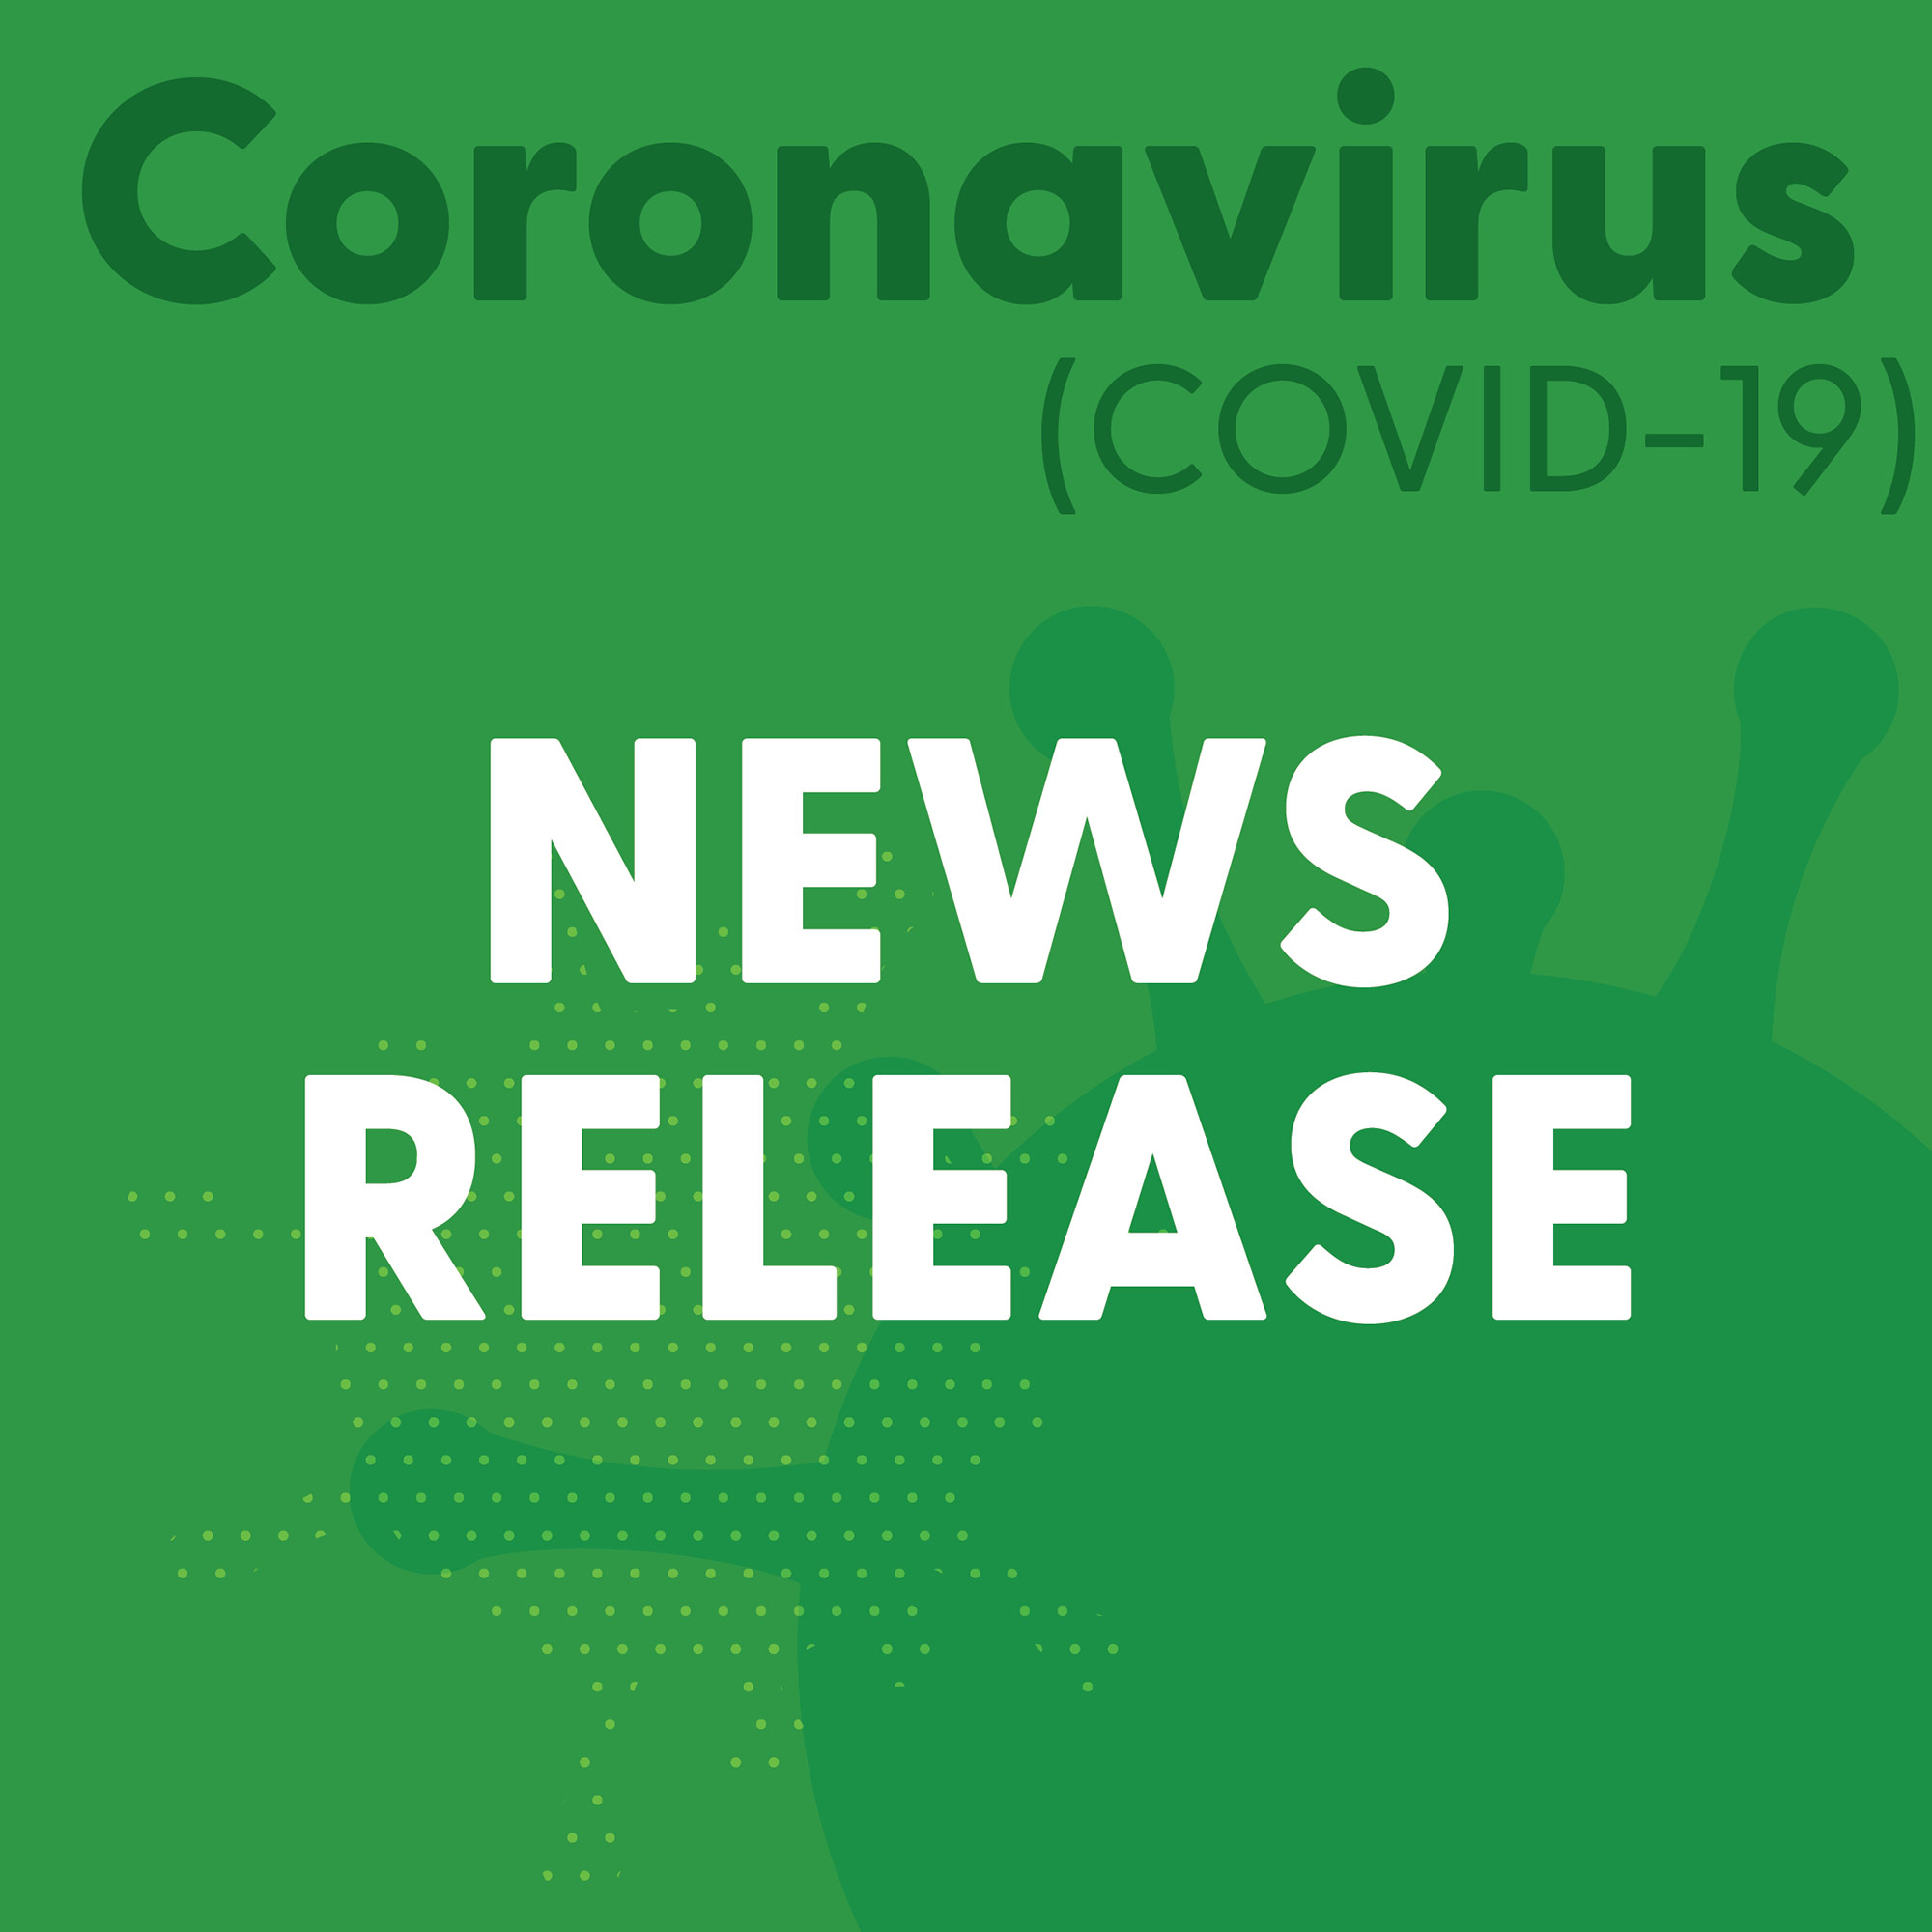 COVID-19 News Release (Green)